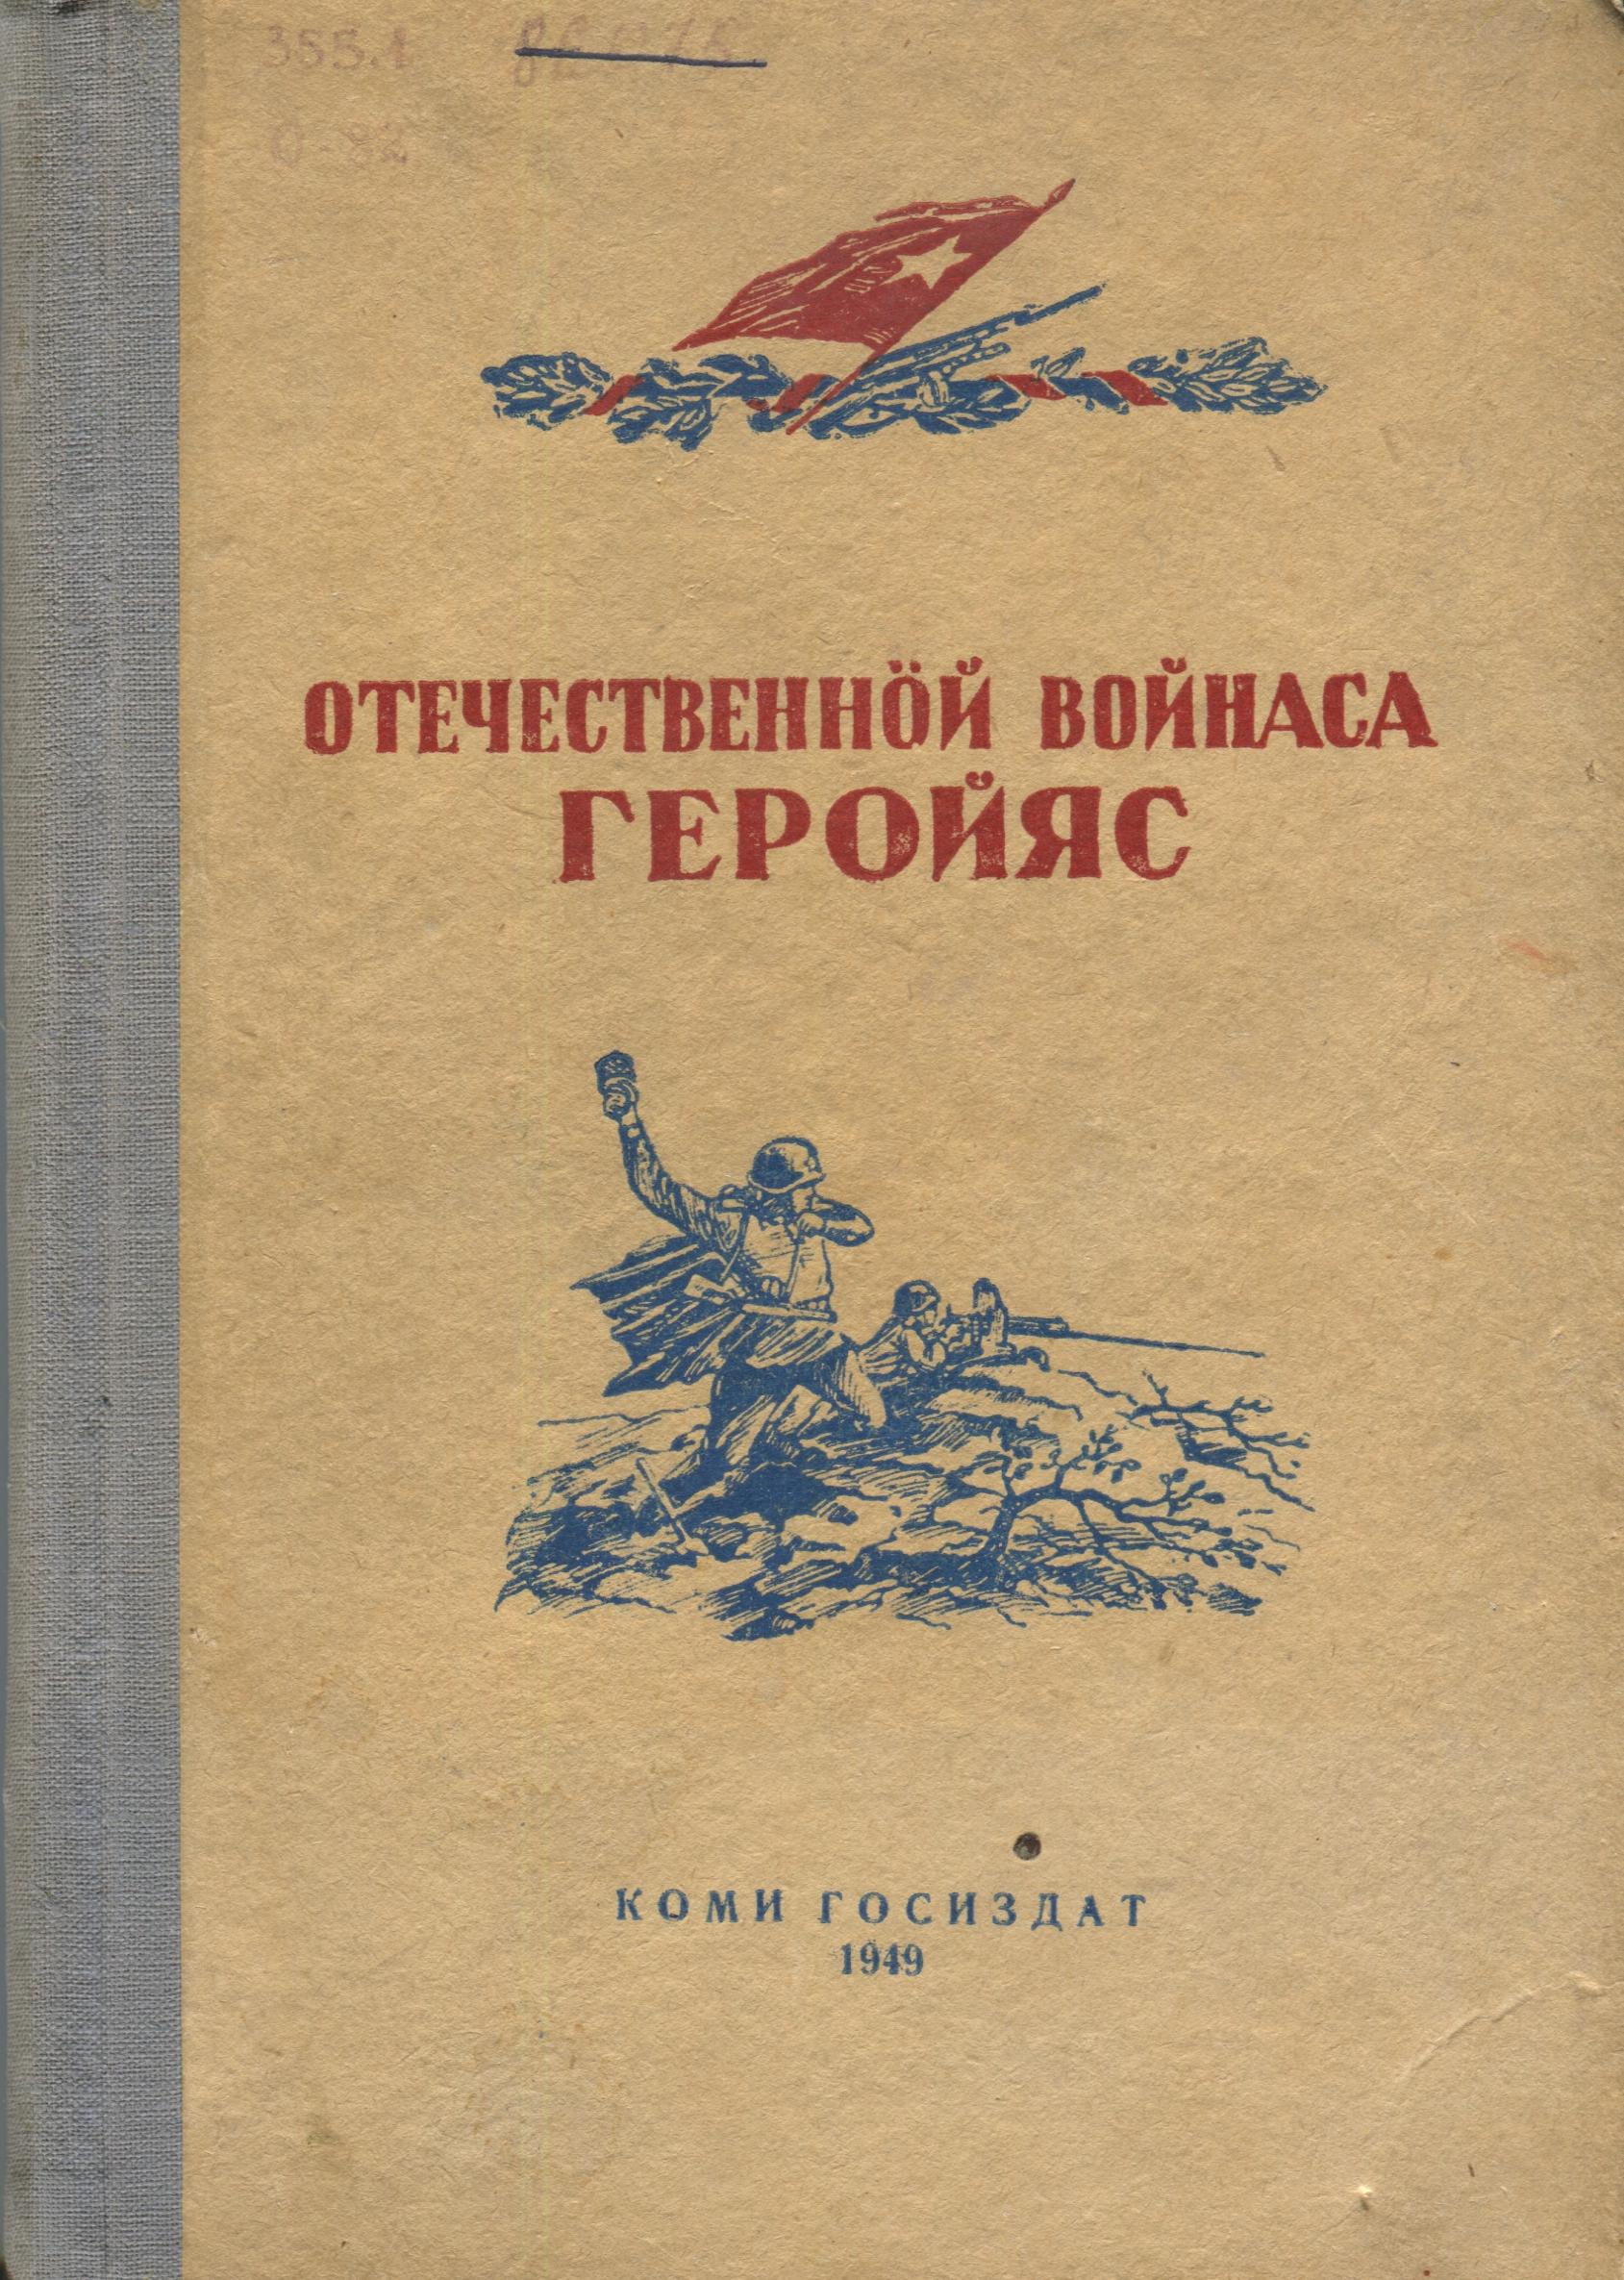 Ovg cover 1949.jpg